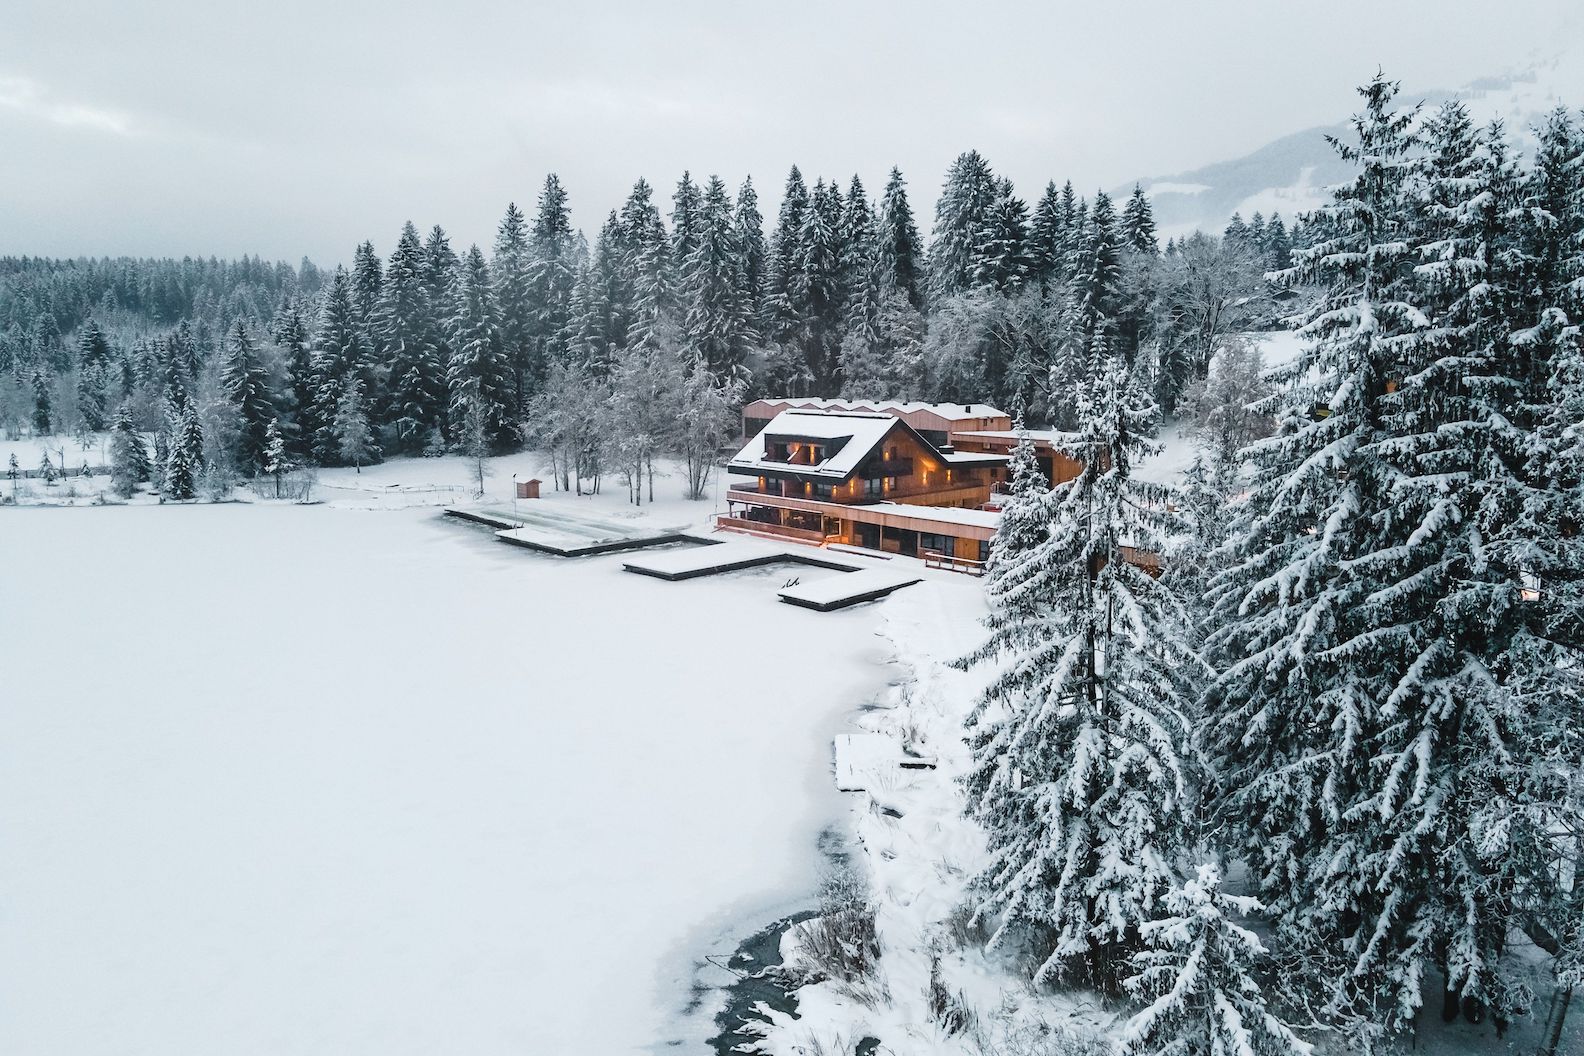 Alpenhotel Umgeben Von Schnee C Jukka Pehkonen Alpenhotel Kitzbuehel